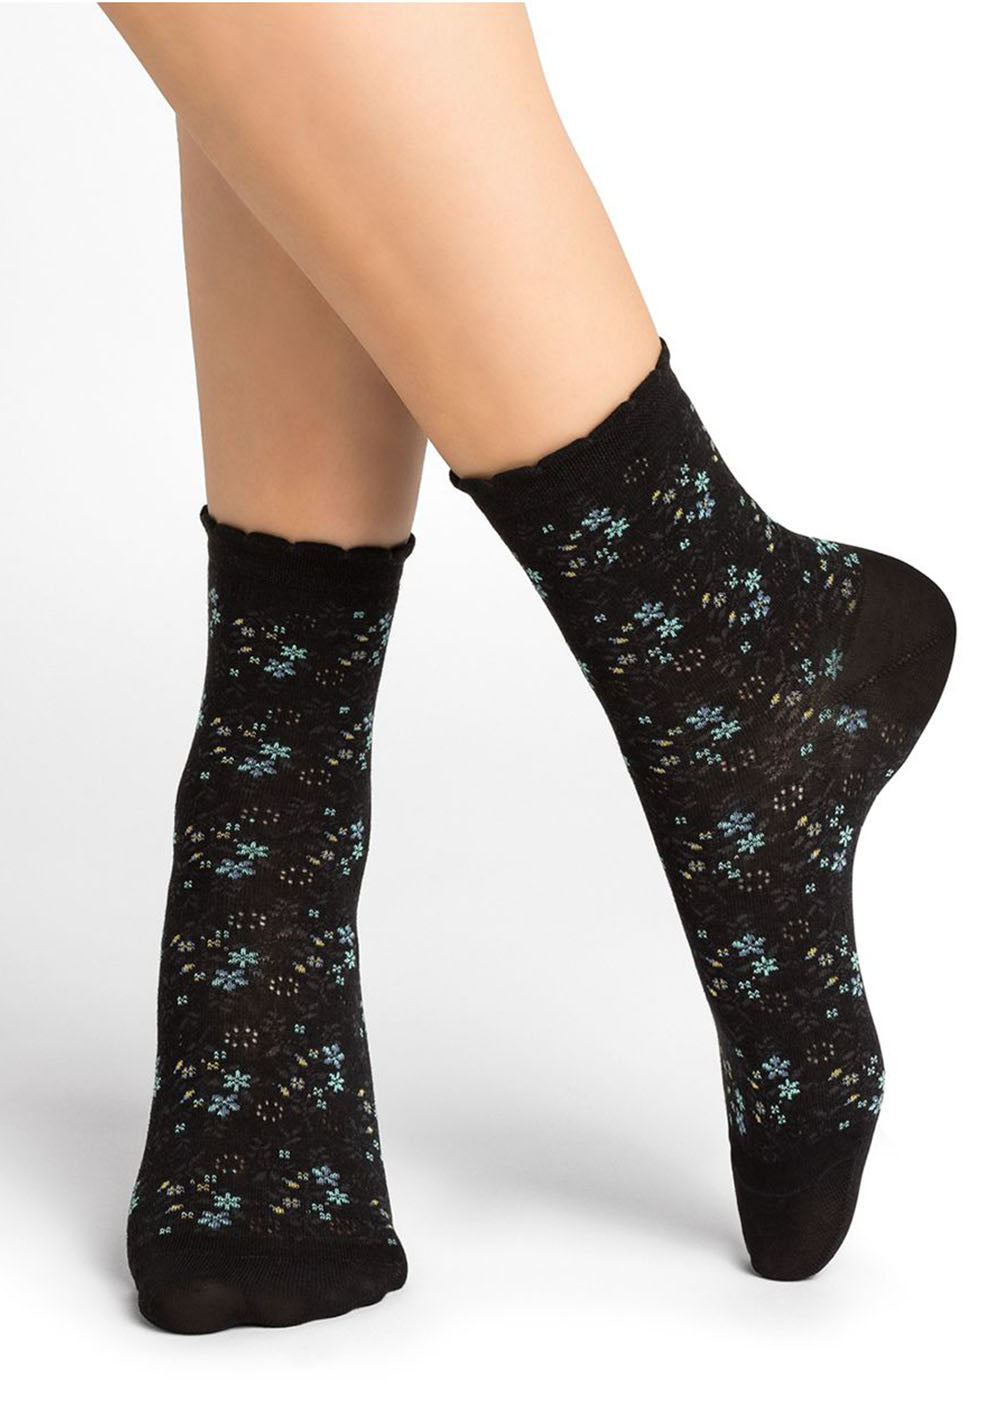 Open Work Liberty Pattern Ankle Socks - Black - Bleuforet Canada - Danali